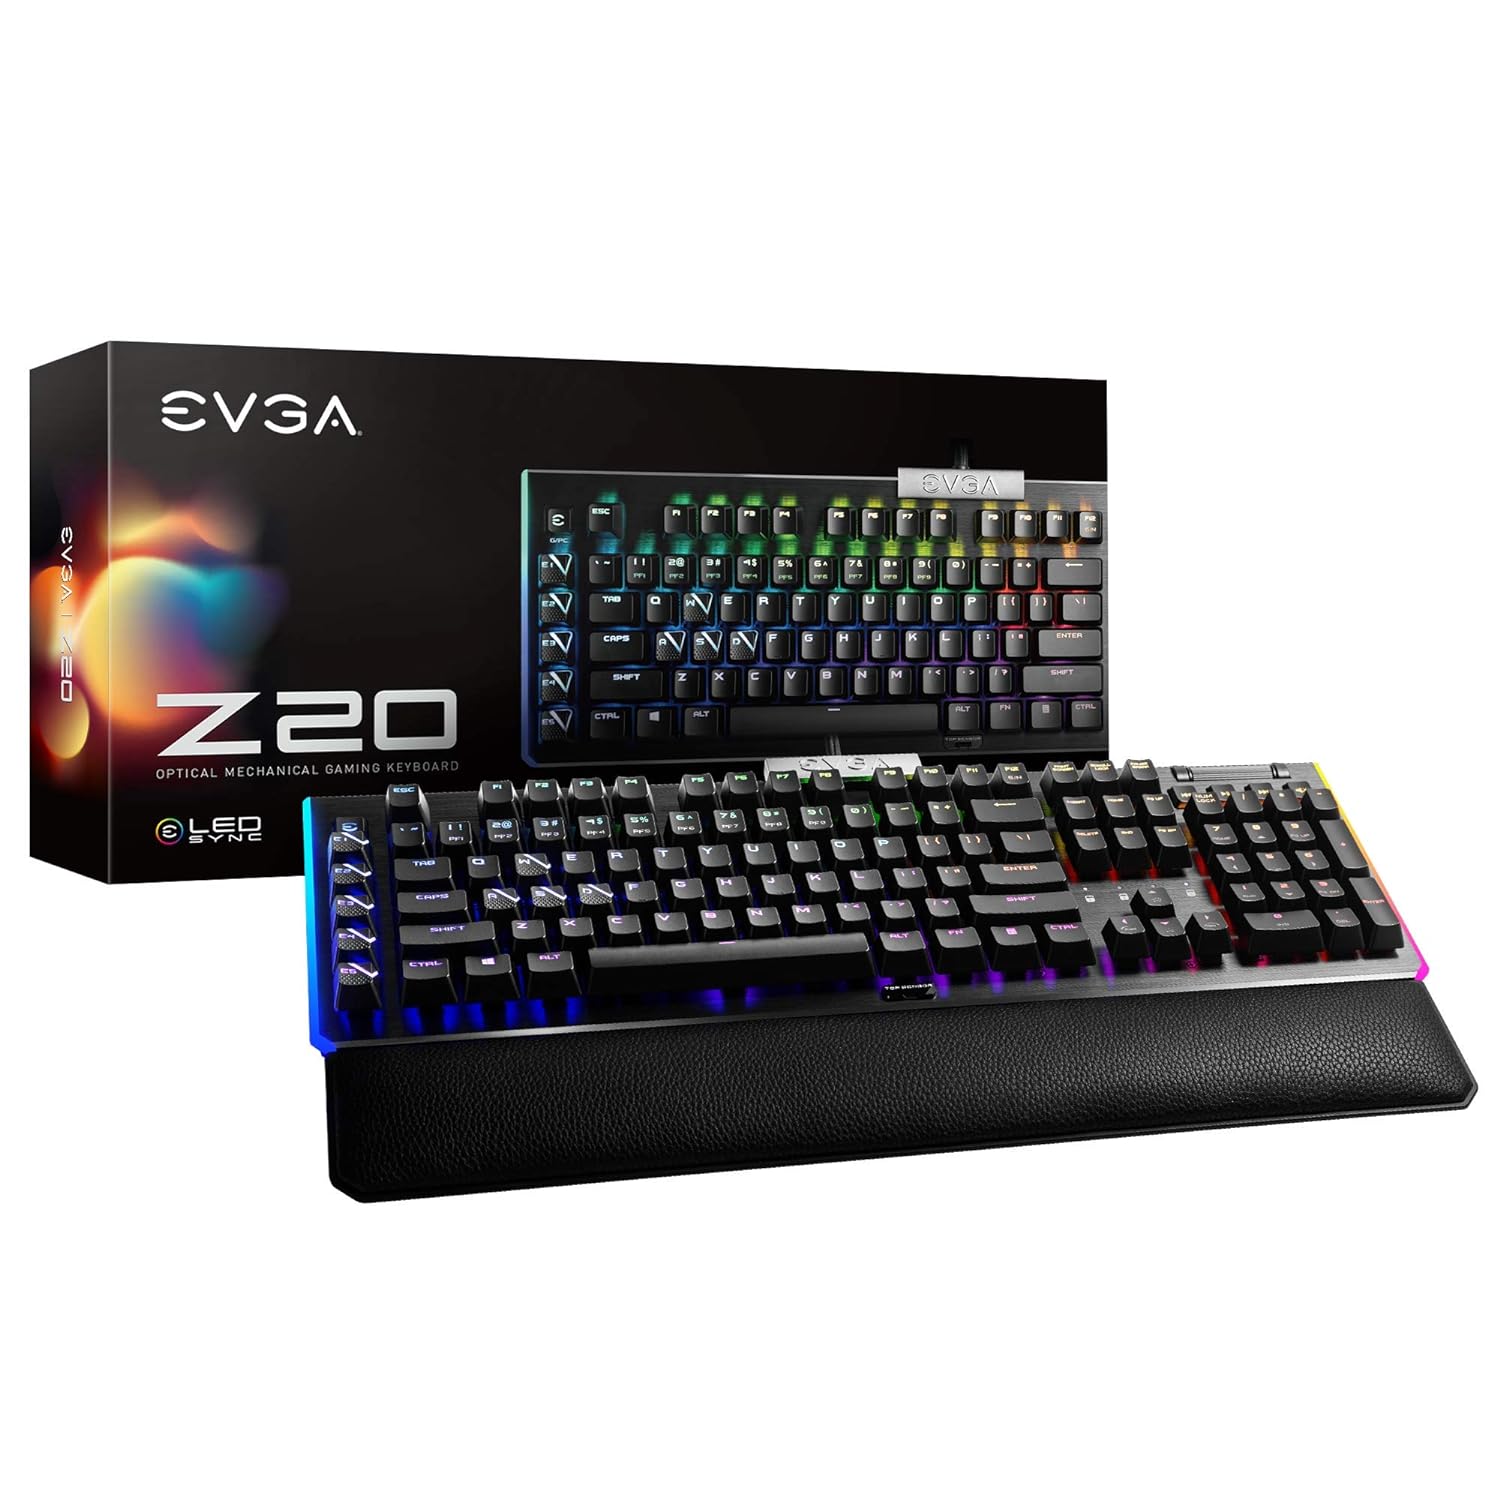 EVGA Z20 Rgb Optical Mechanical Gaming Keyboard, Optical Mechanical Switches (Linear), 811-W1-20Us-Kr, USB, Black